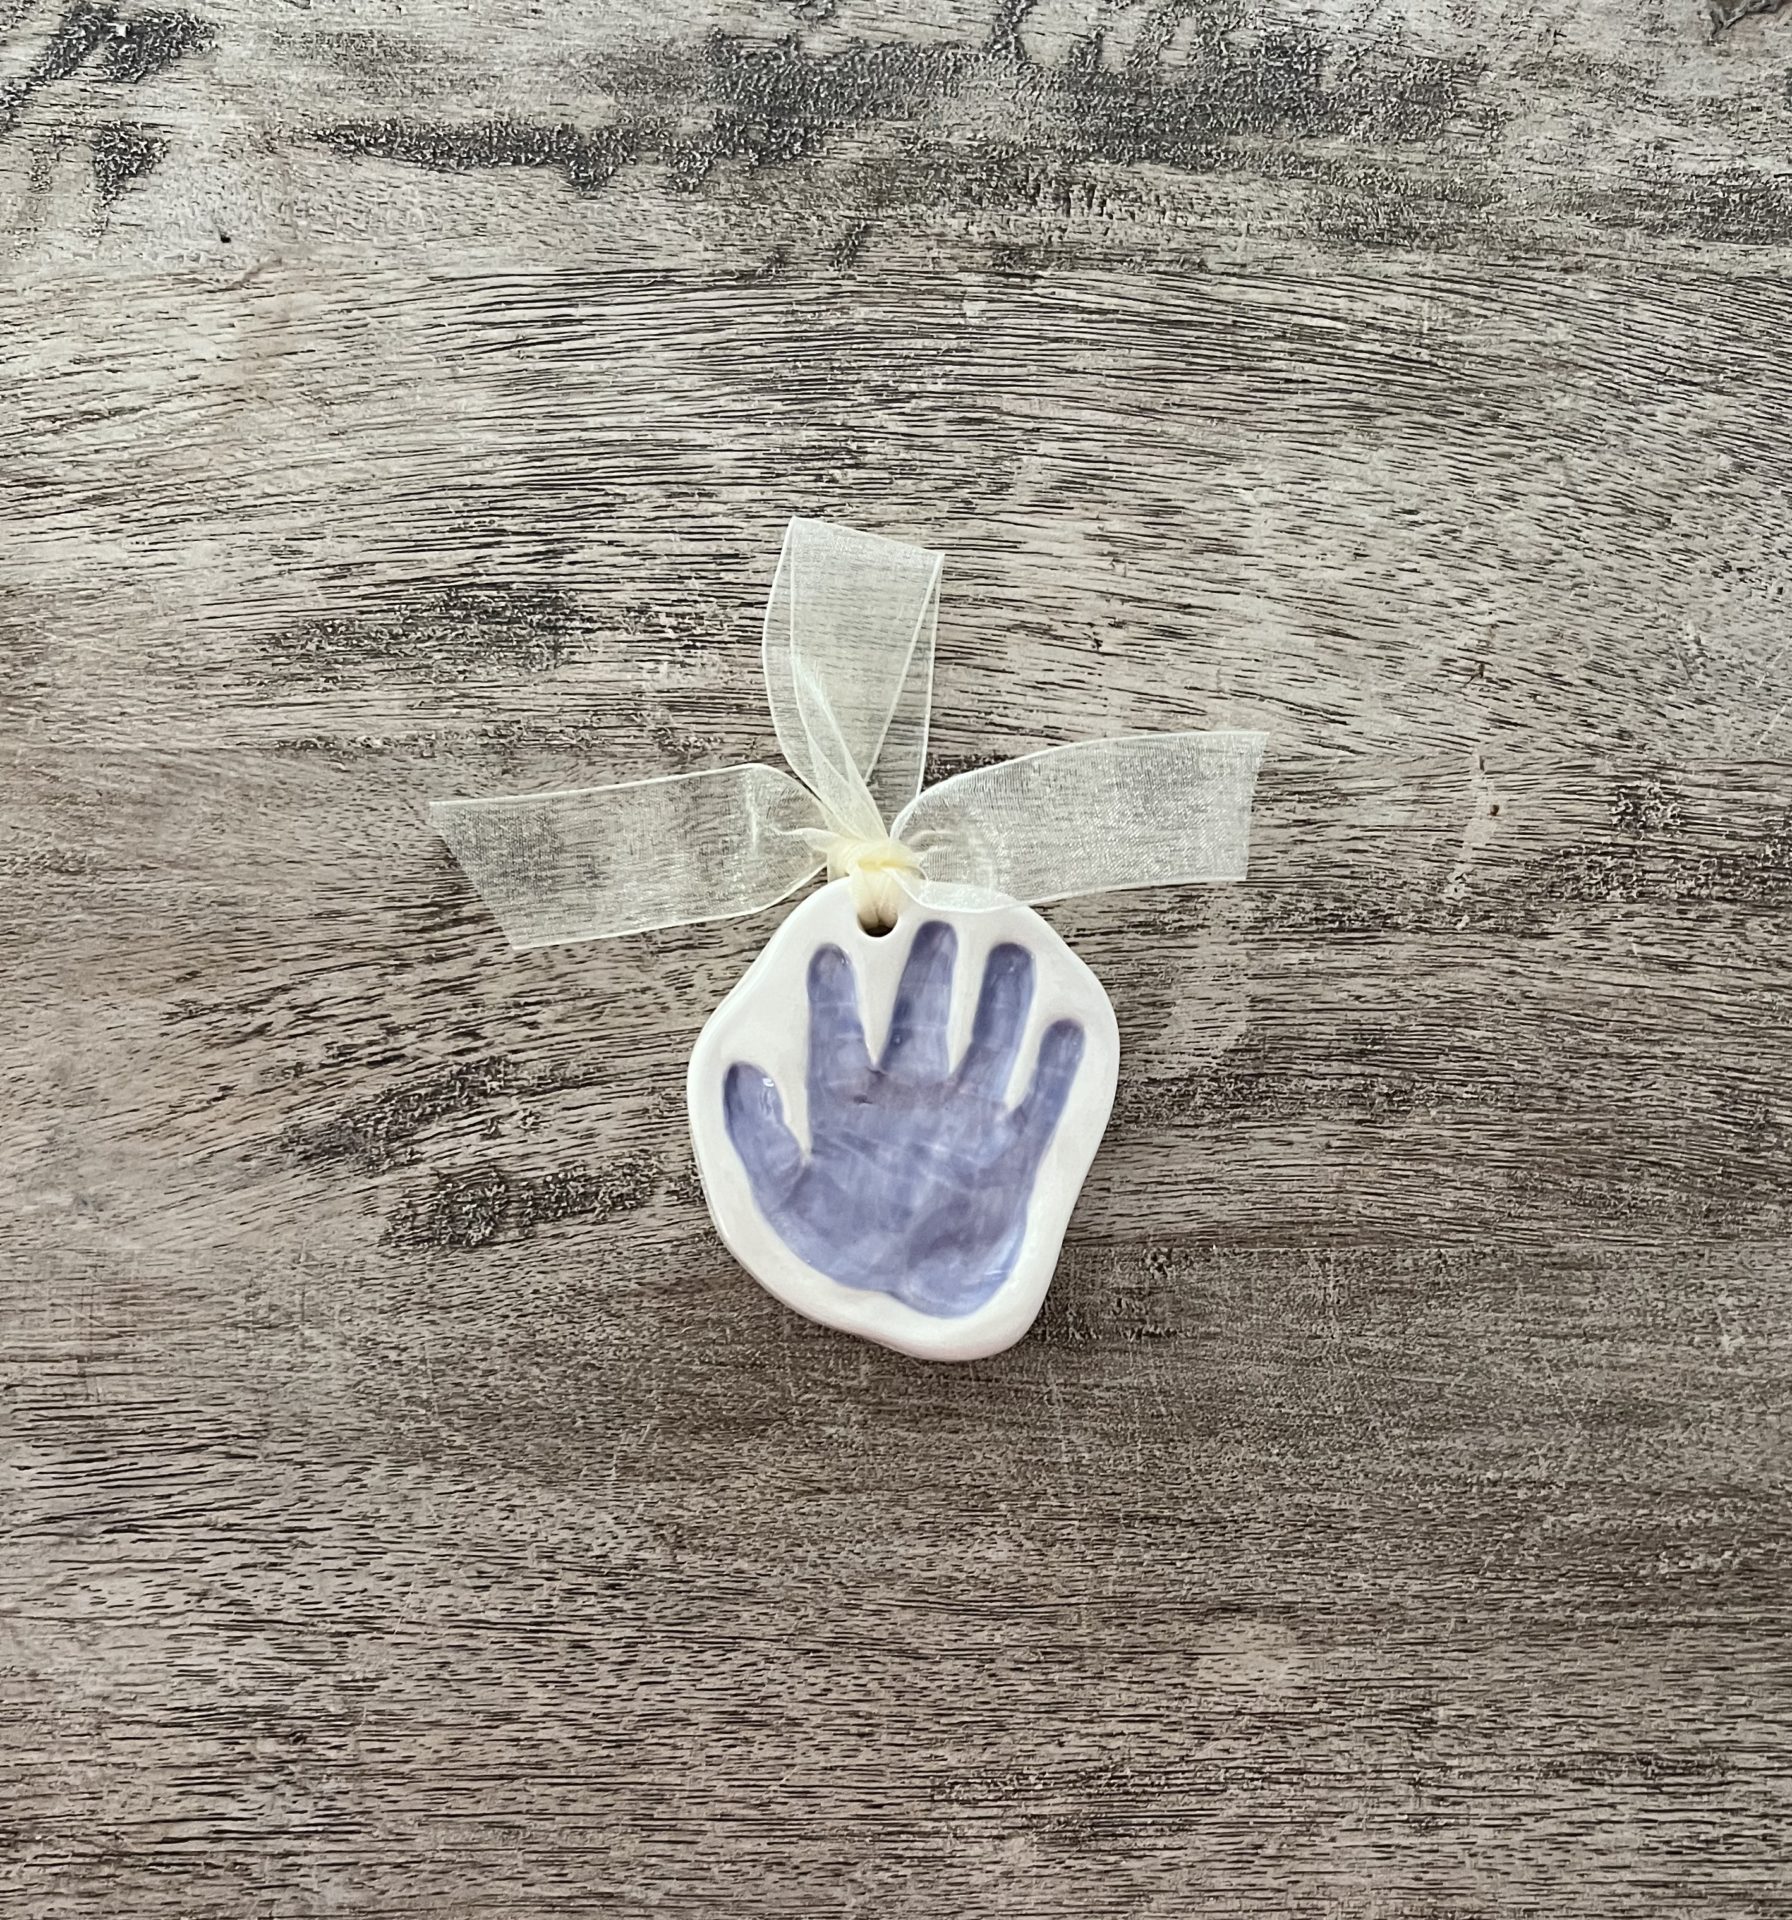  Bixinyo Family Handprint Ornament Kit - Personalized